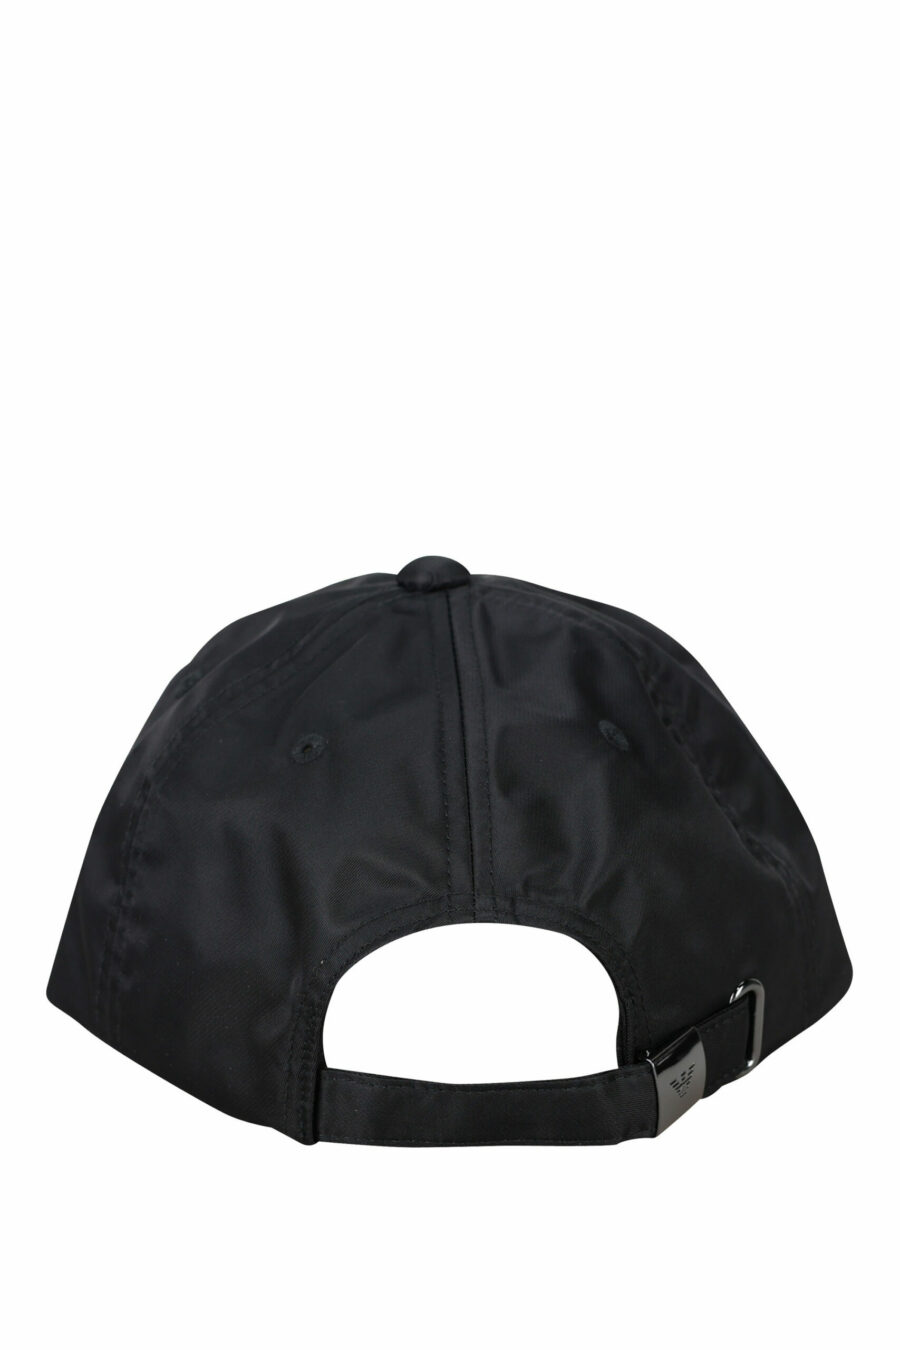 Black cap with black metal eagle logo - 8057767767730 2 scaled